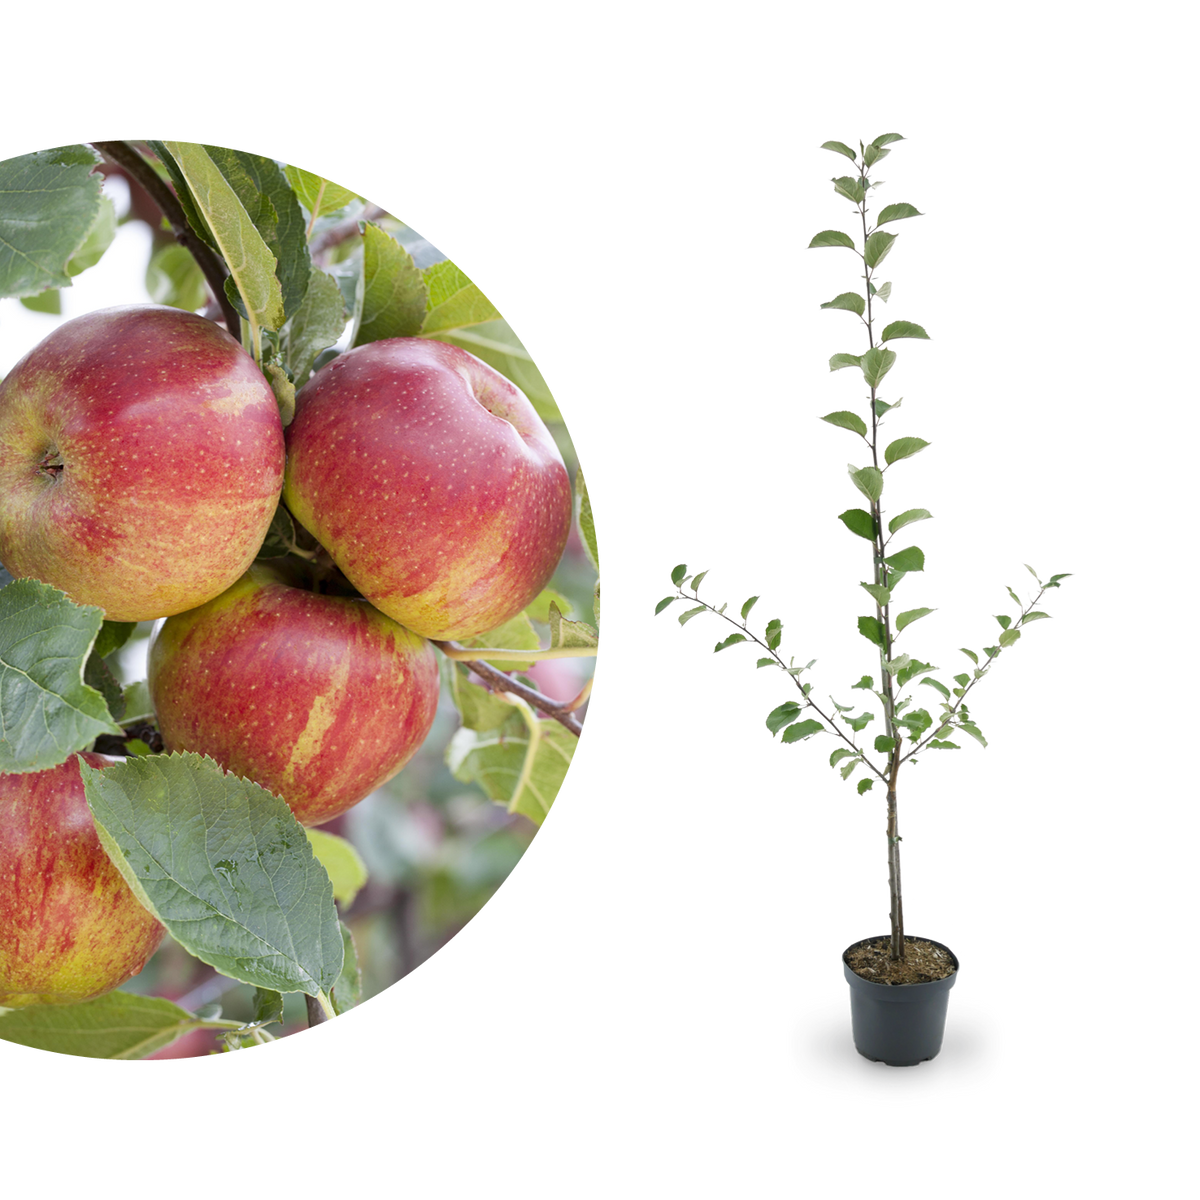 Bio-Apfelbaum 'Boskoop' Winterapfel kaufen - Plantura Shop